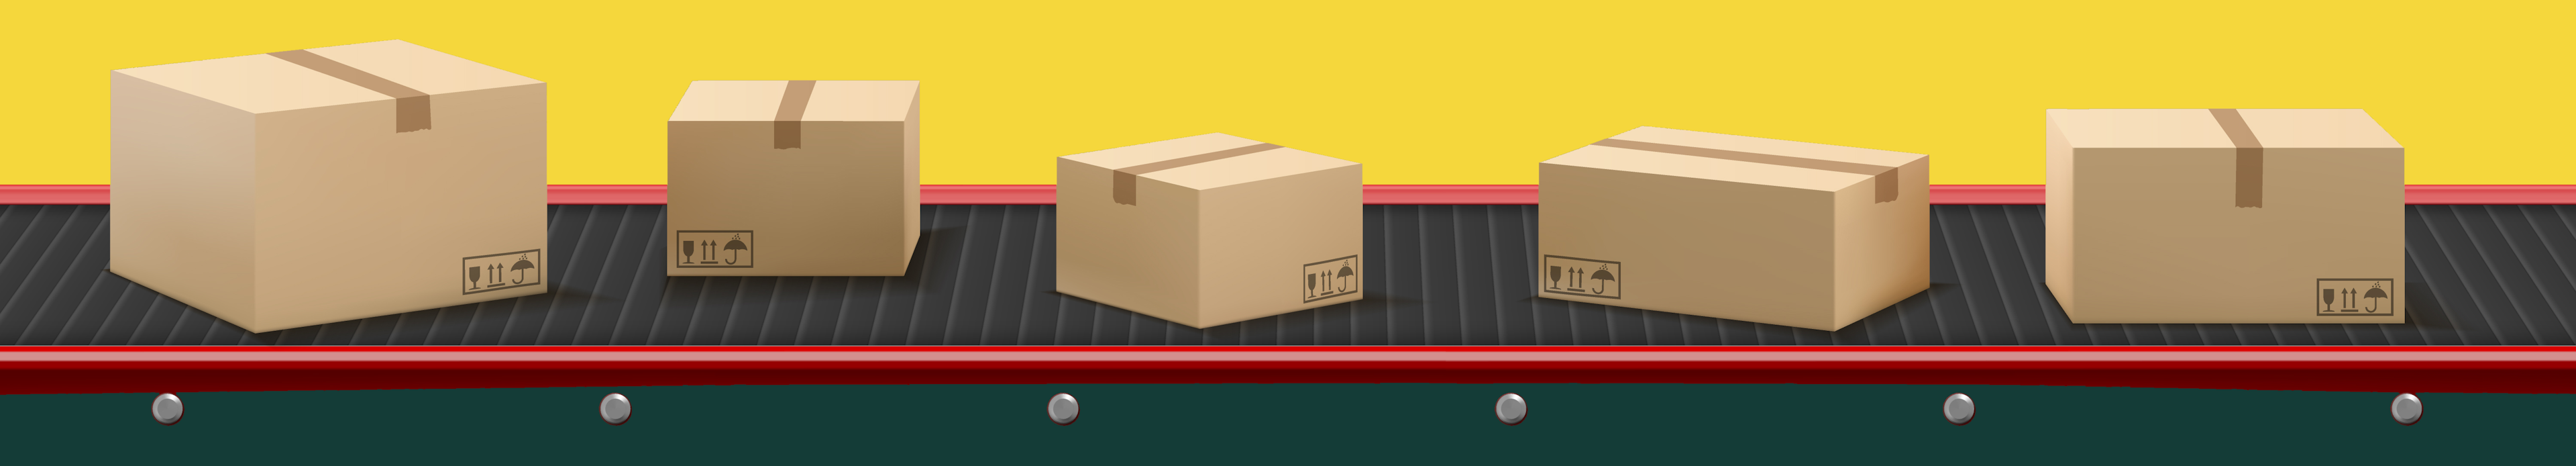 Boxes on a conveyer belt